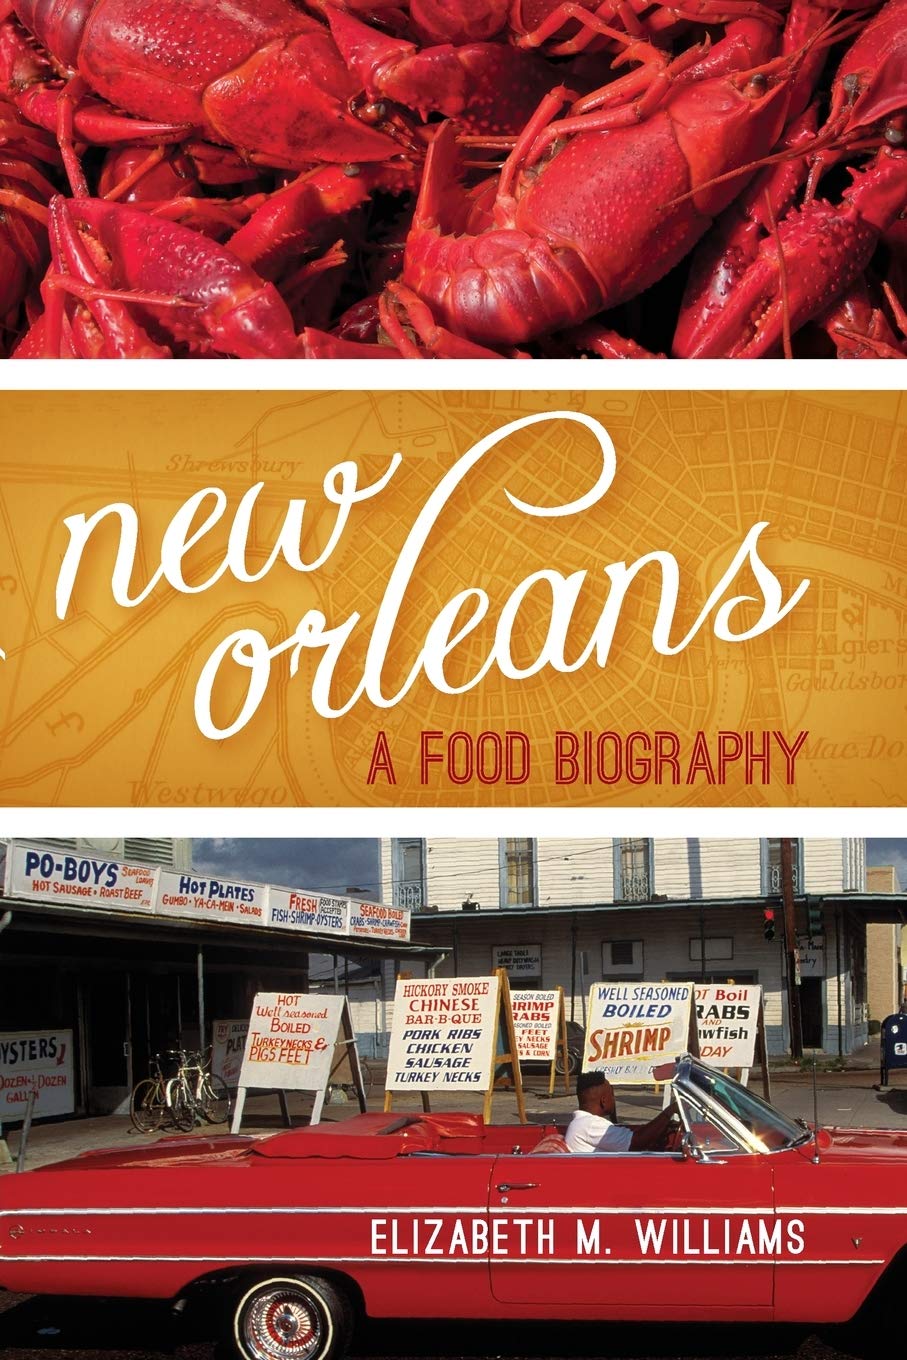 New Orleans: A Food Biography (Elizabeth M. Williams)